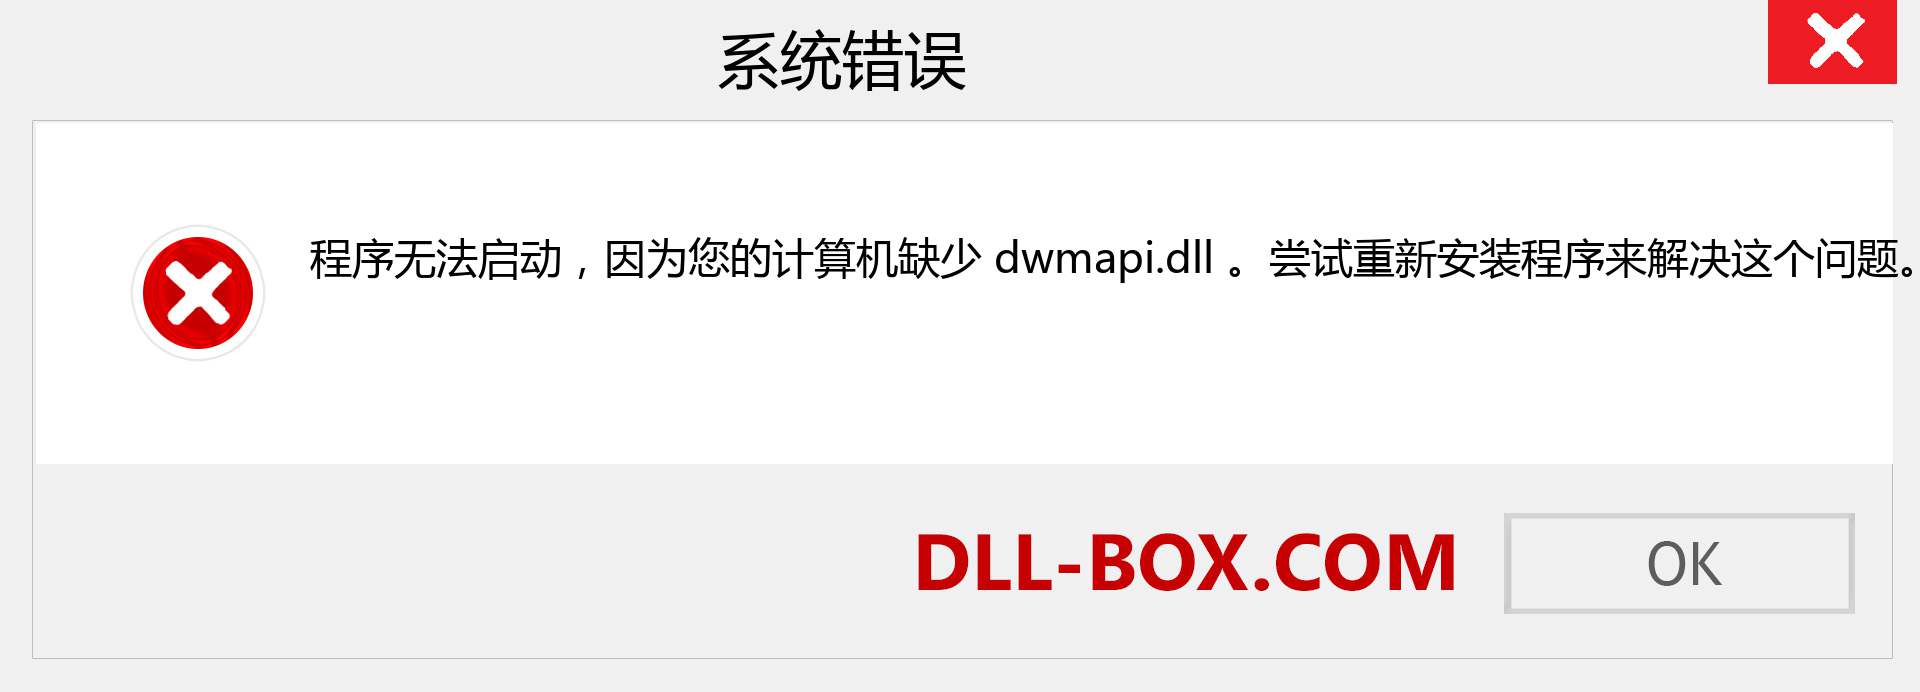 dwmapi.dll 文件丢失？。 适用于 Windows 7、8、10 的下载 - 修复 Windows、照片、图像上的 dwmapi dll 丢失错误